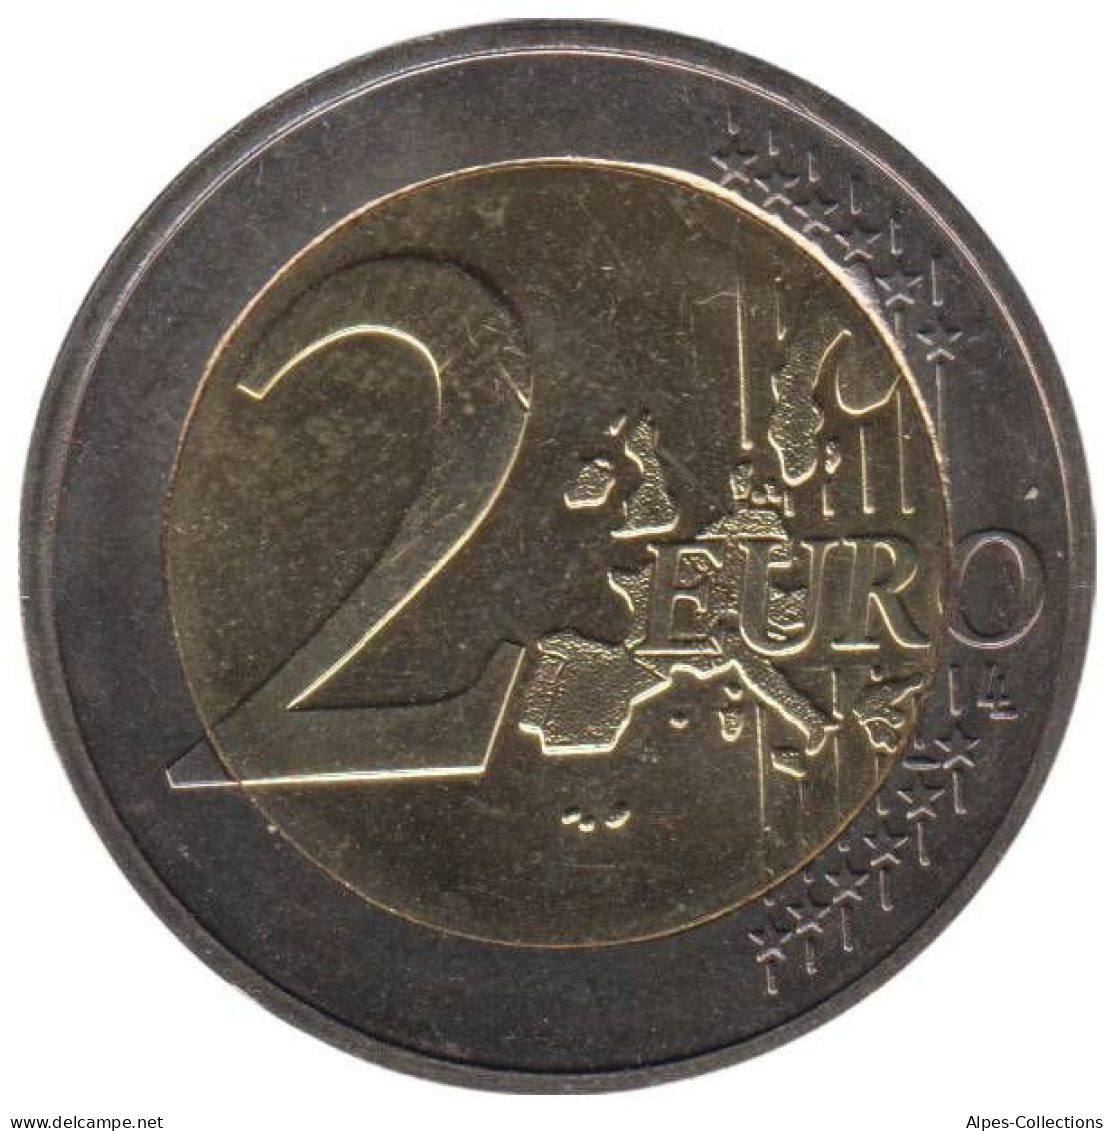 LU20003.1 - LUXEMBOURG - 2 Euros - 2003 - Luxemburg